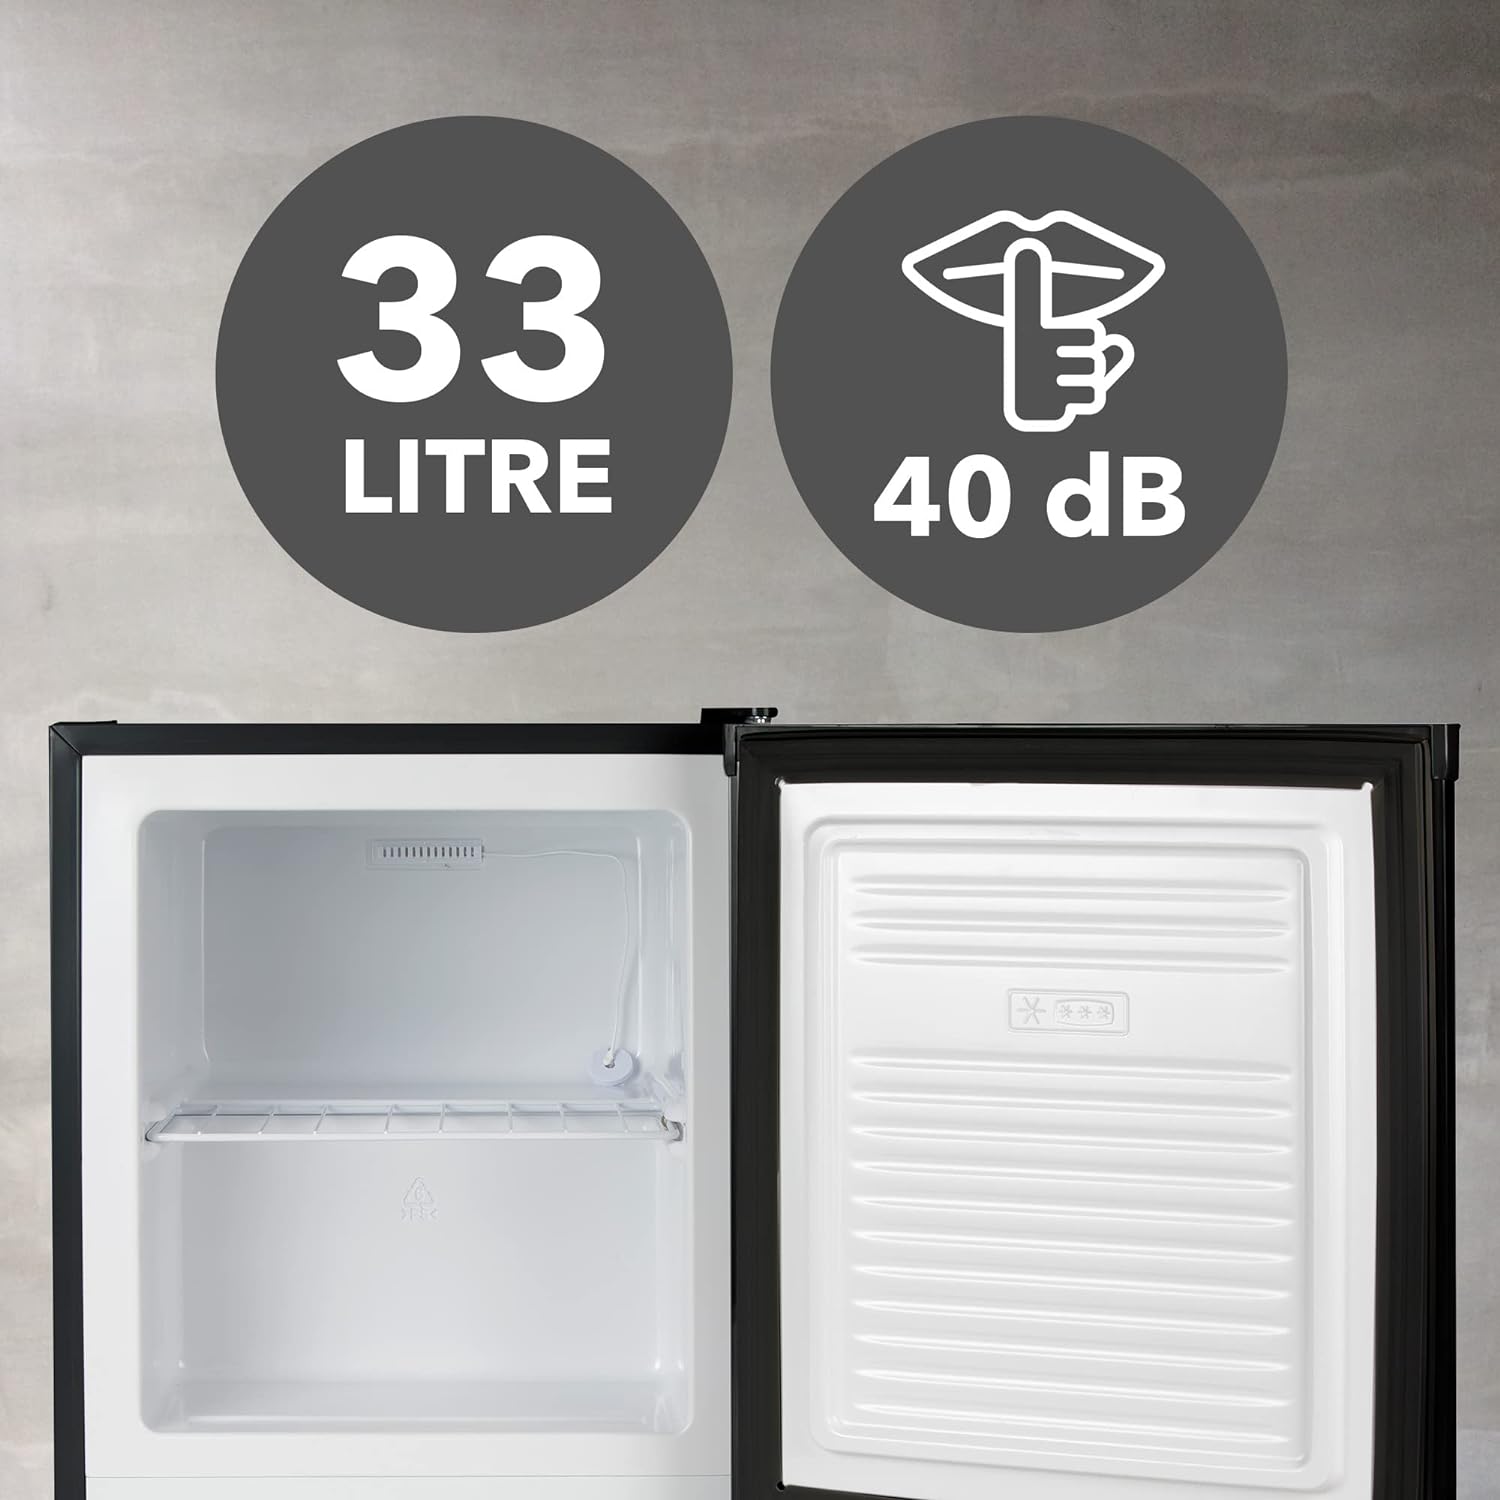 PRIMO PR106DV Freestanding Mini Freezer, 33 L, Small, Class F, 4 Stars, Black - Amazing Gadgets Outlet